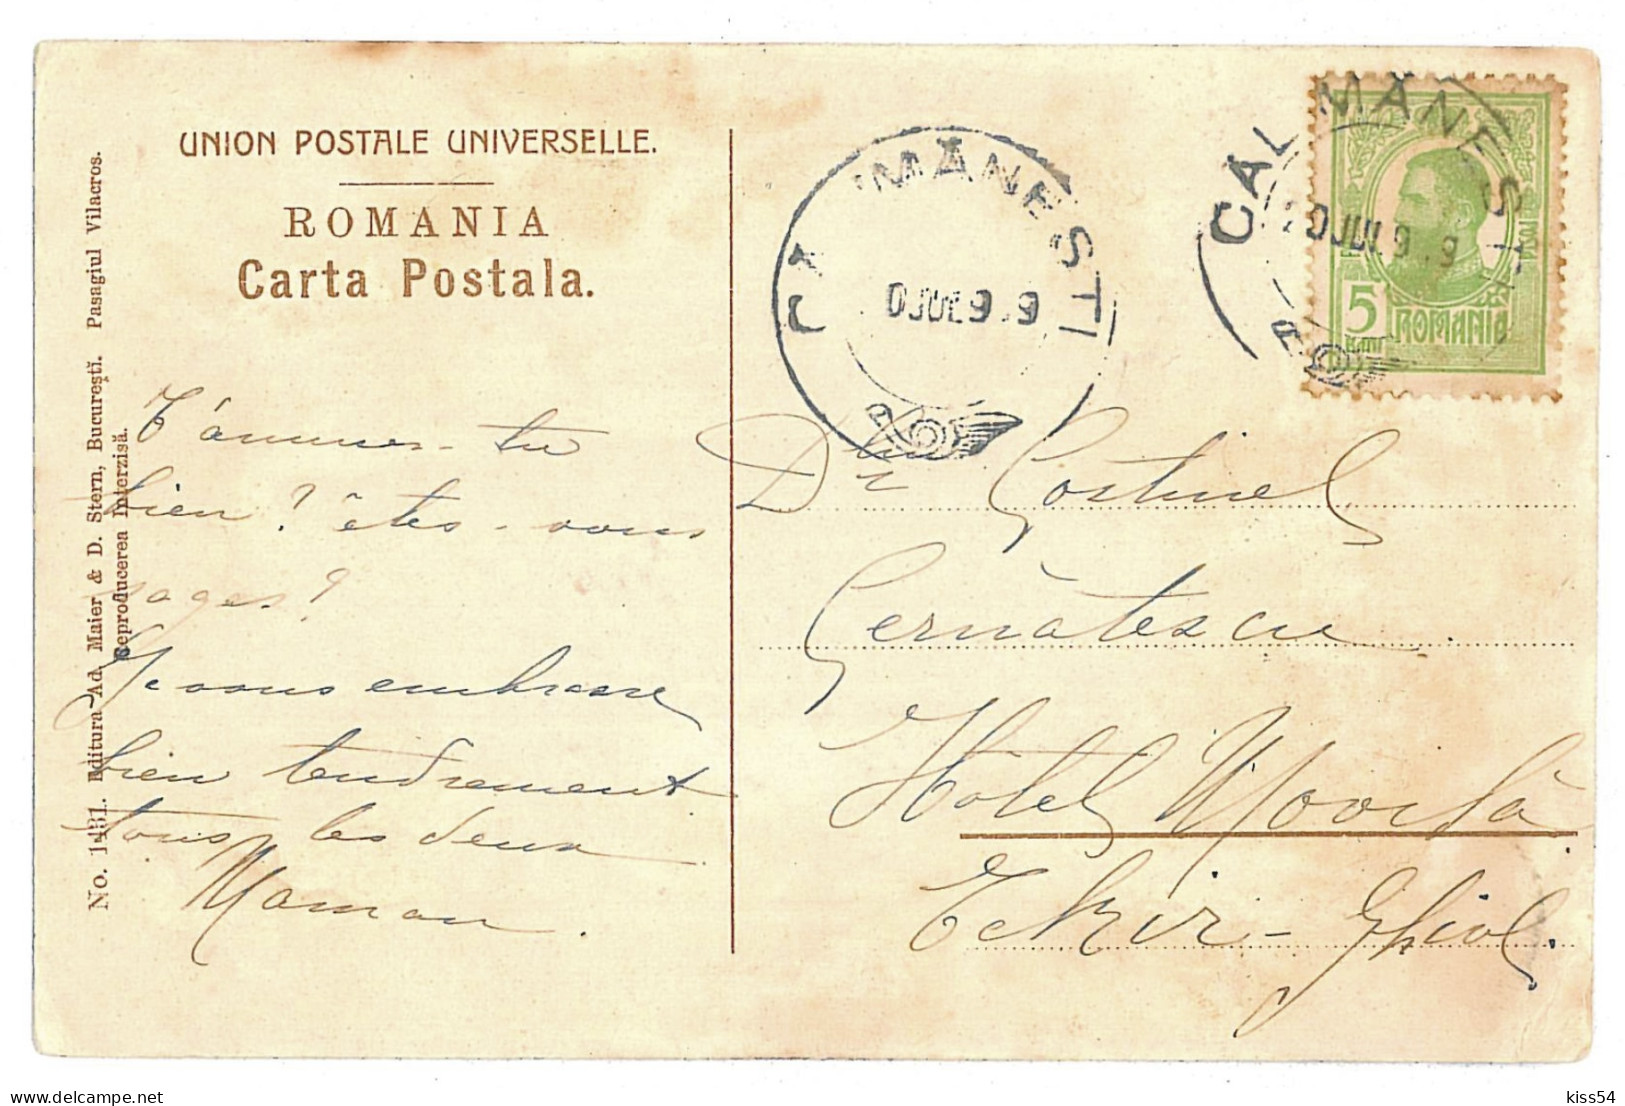 RO 999 - 10590 CALIMANESTI, Valcea, Romania, Railway, Table Traian - Old Postcard - Used - 1909 - Roumanie